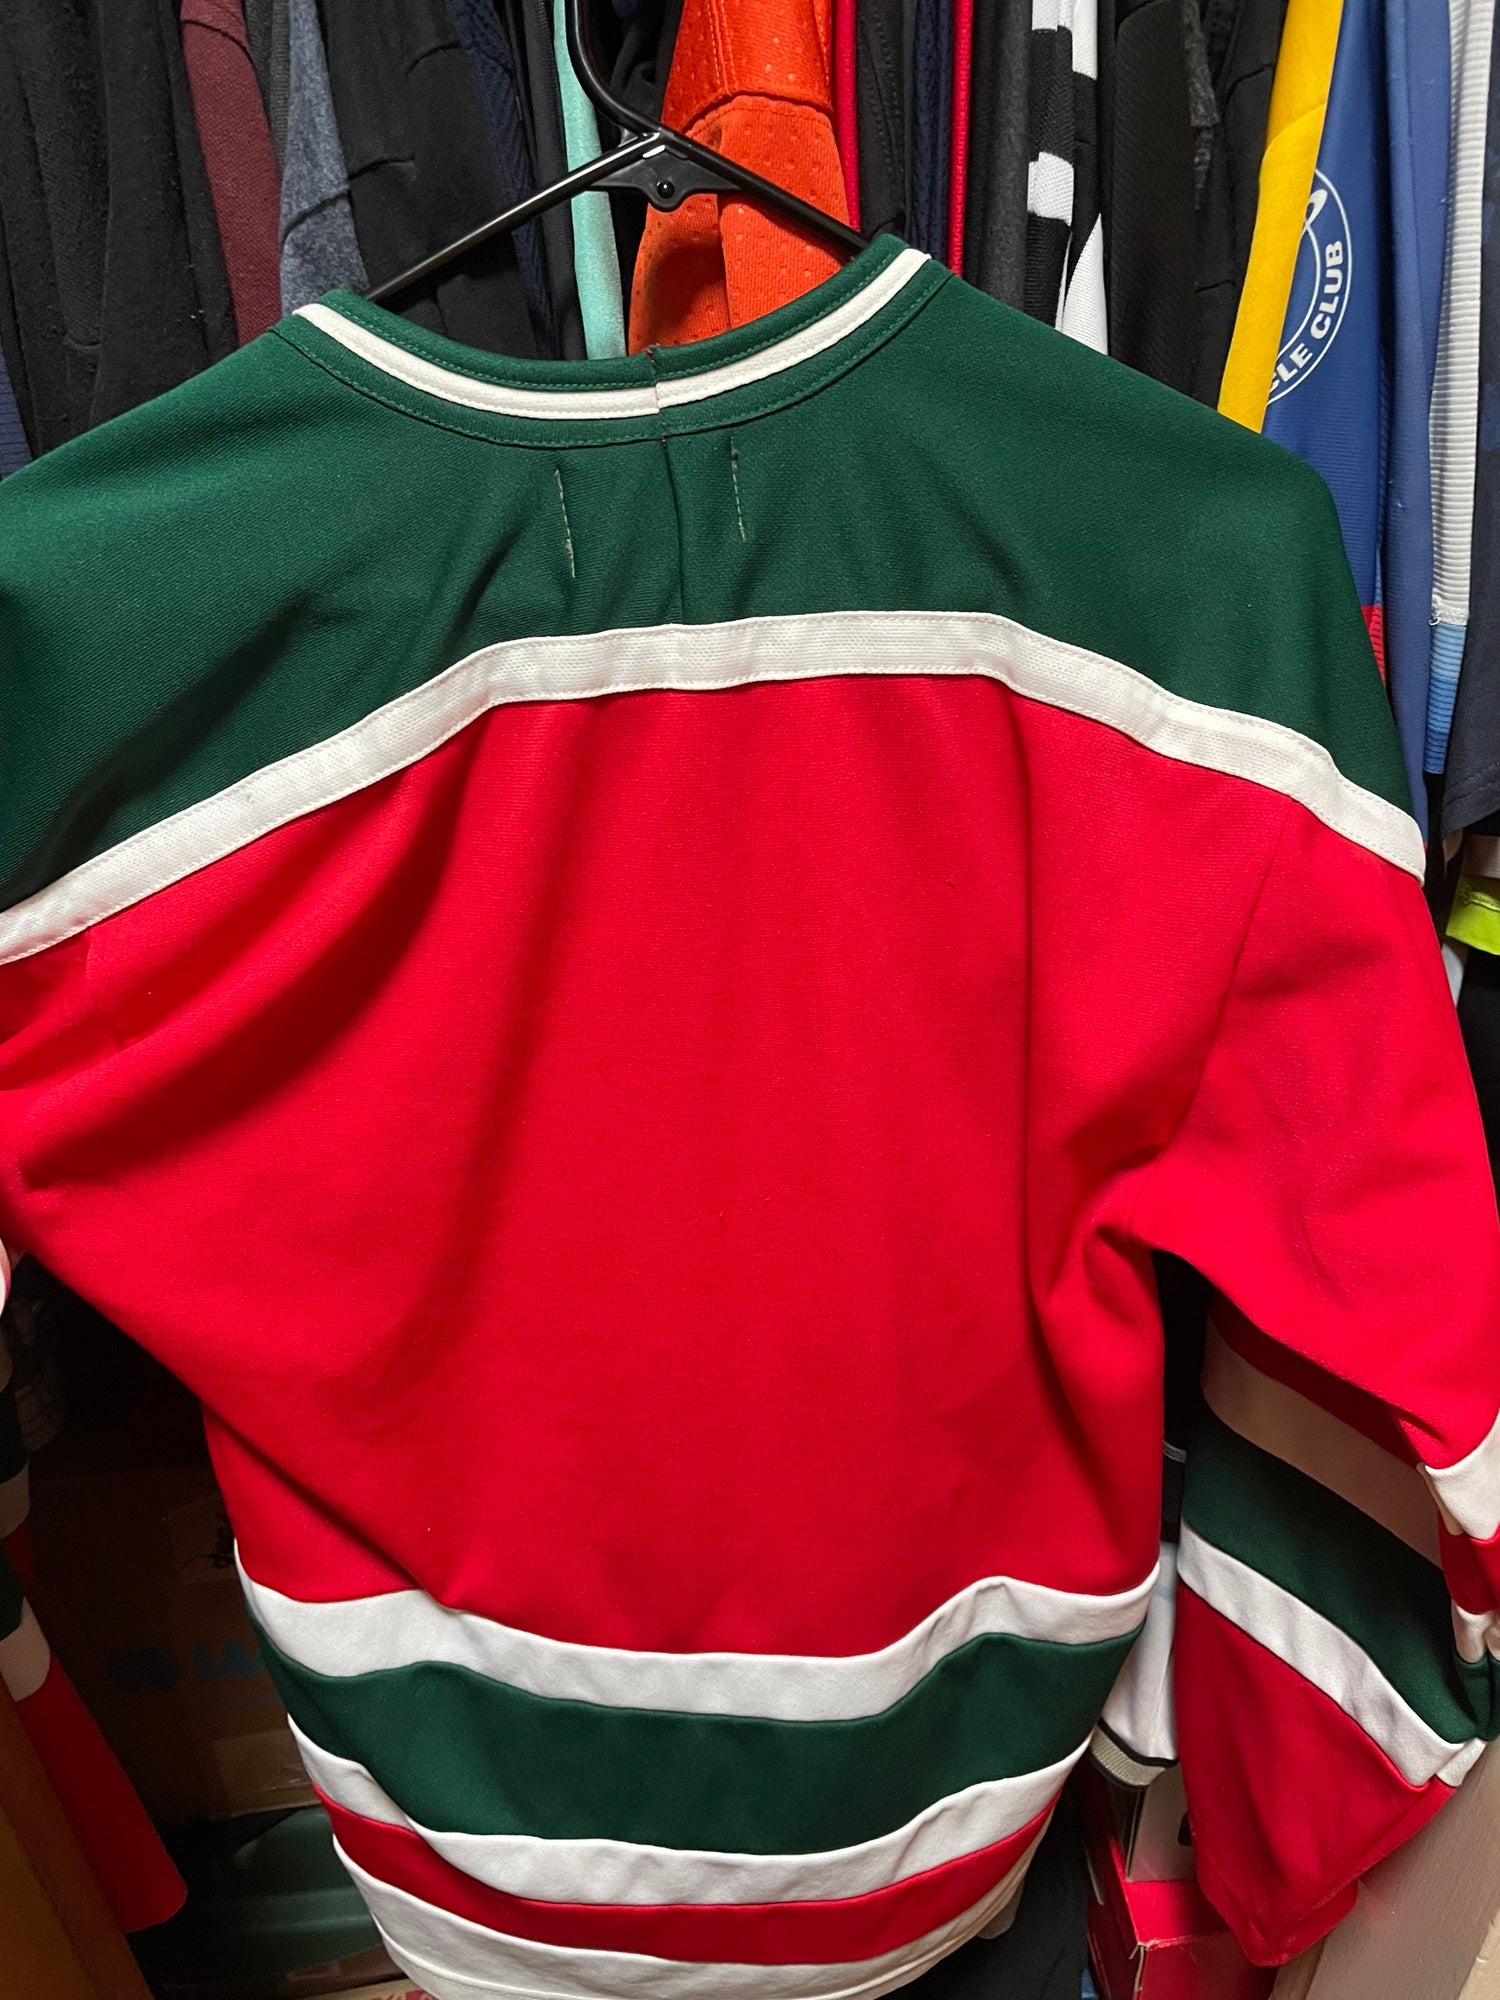 New Jersey Devils Est 1974 Vintage Hockey Shirt - Ink In Action